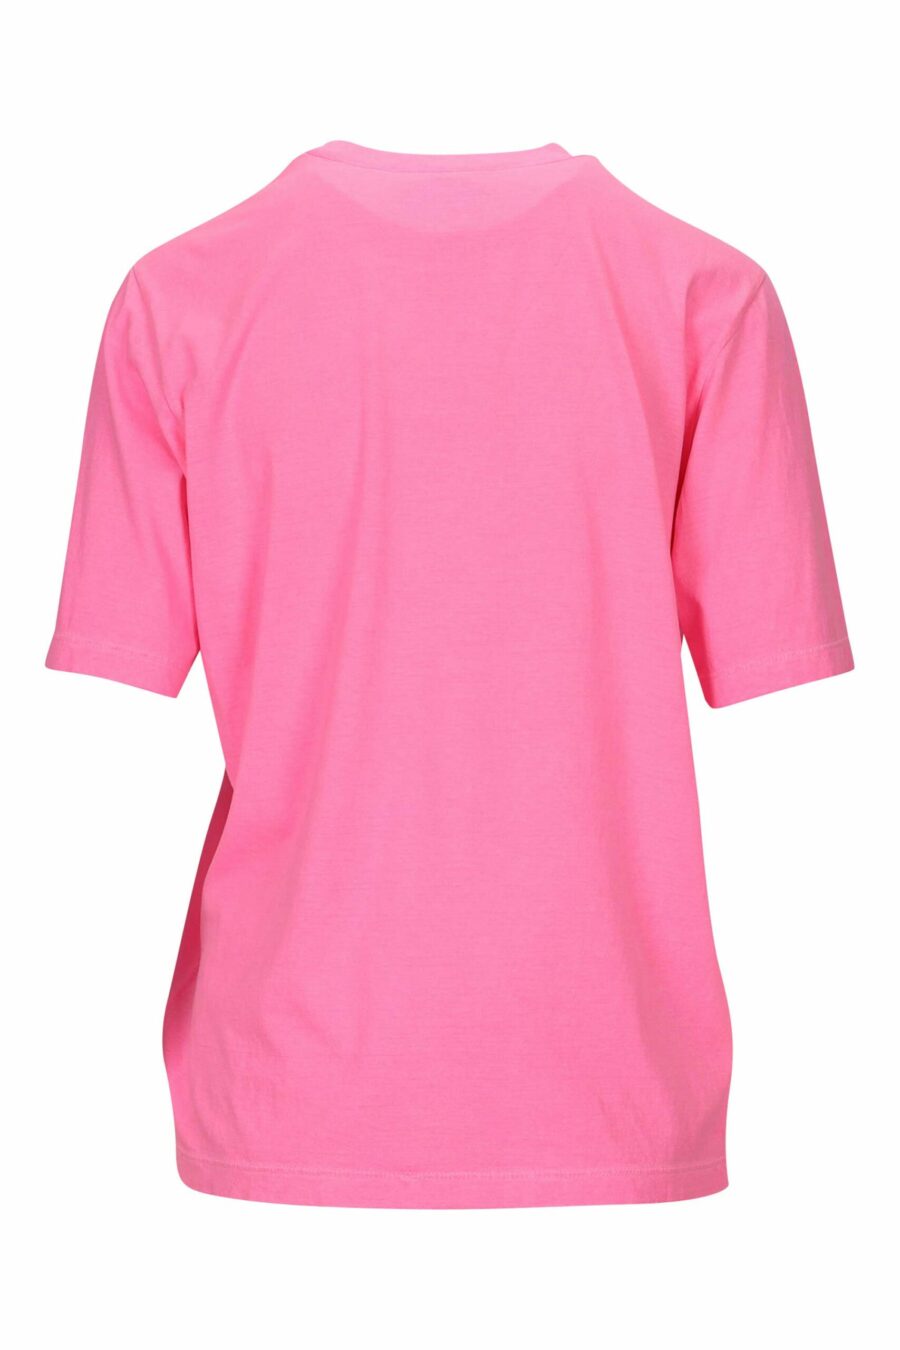 Fuchsia T-shirt with neon green logo - 8054148405106 1 scaled